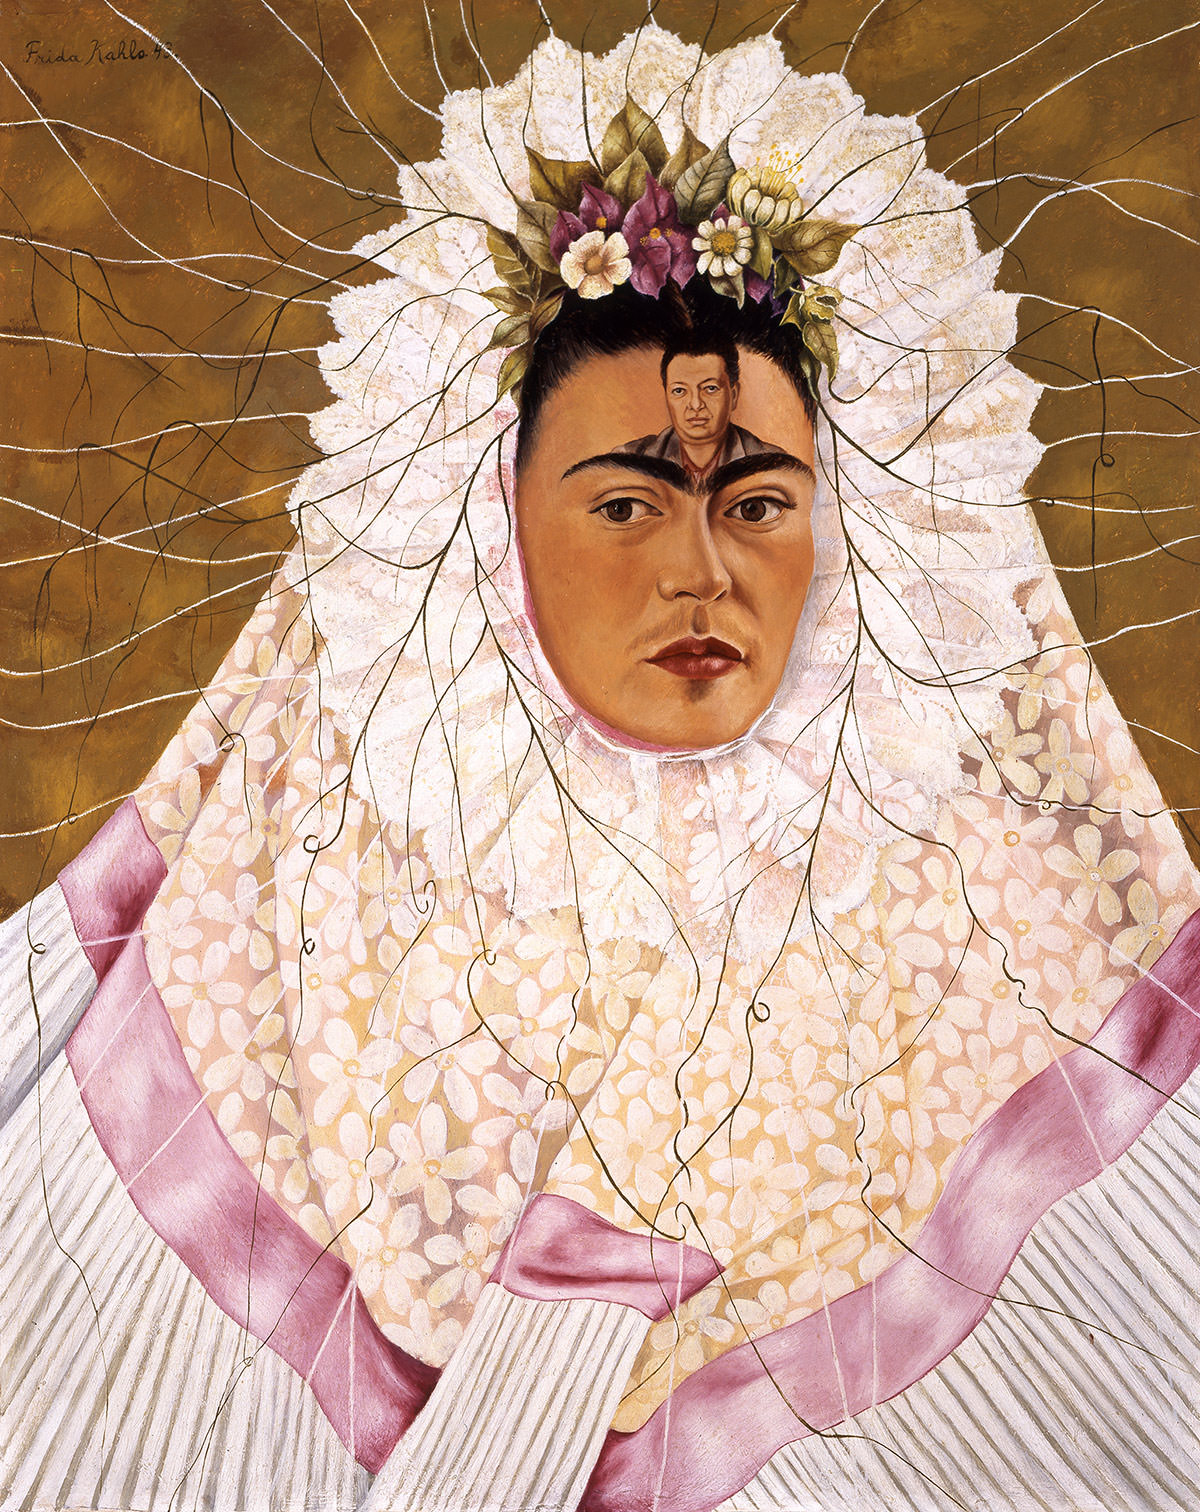 Frida Kahlo, Autoportret jako Tehuana, autoportret artyski, Diego Rivera, Niezła Sztuka